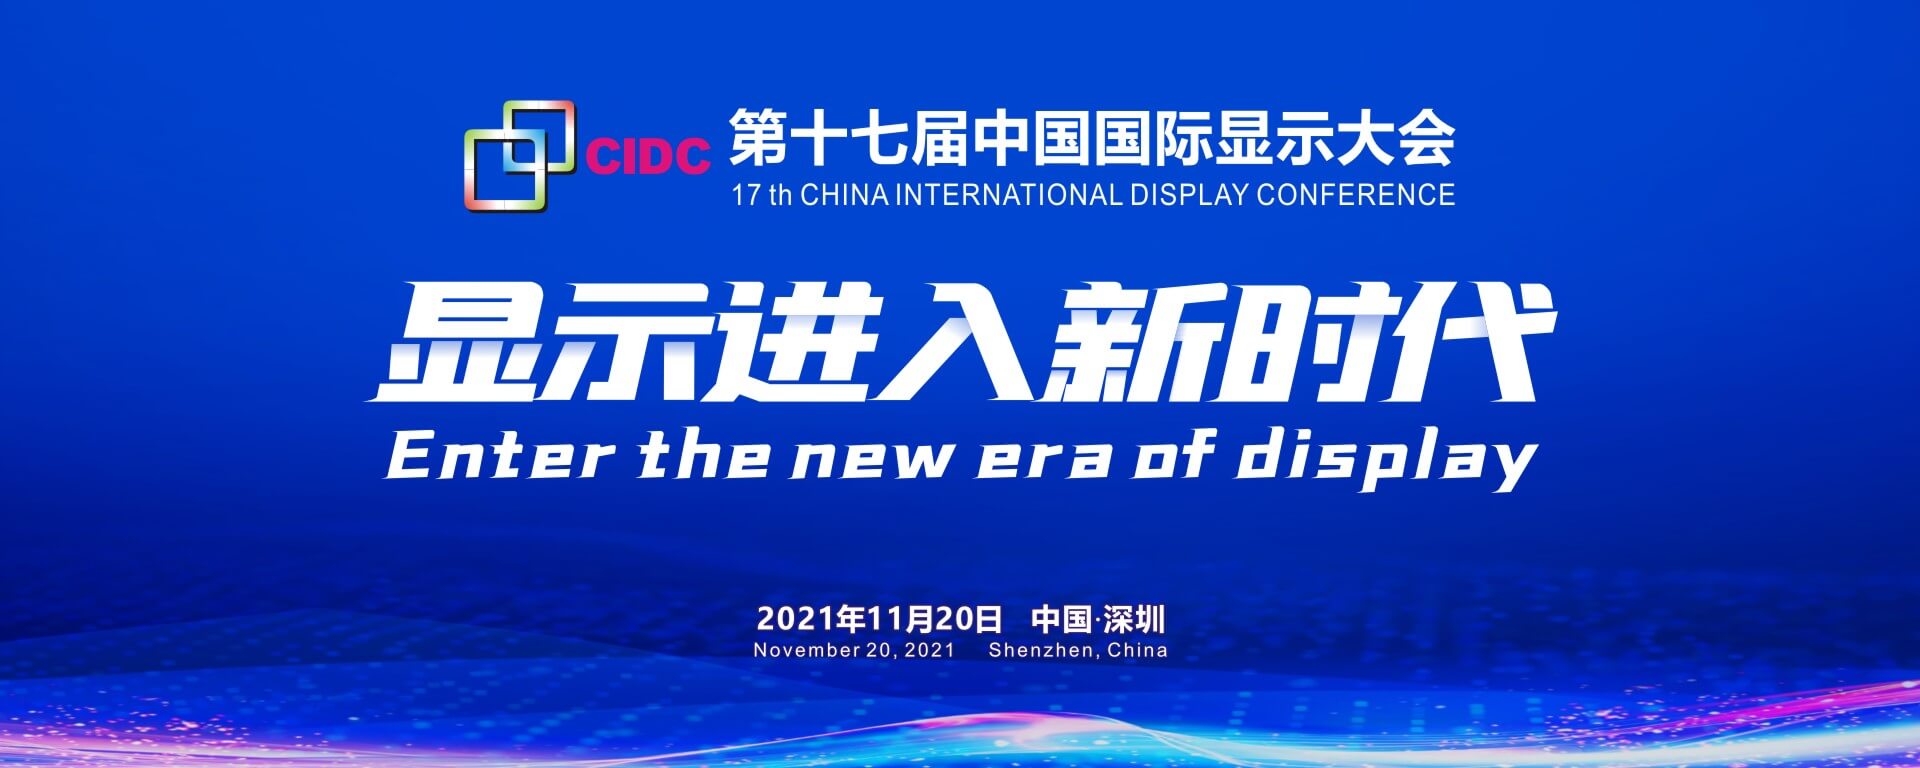 CIDC2015